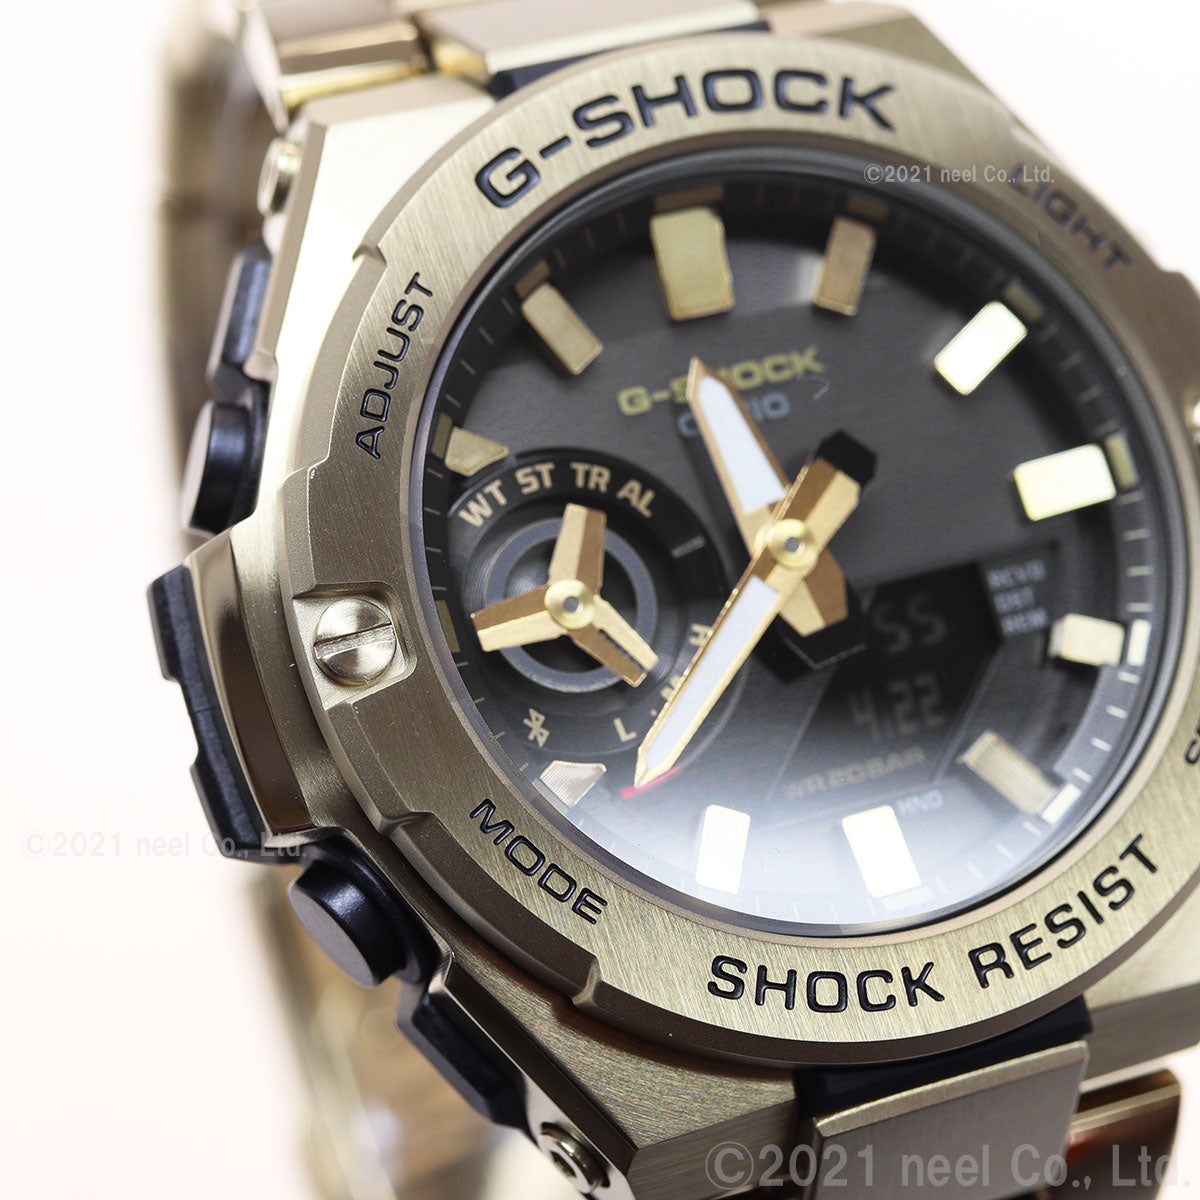 G-SHOCK ソーラー G-STEEL カシオ Gショック Gスチール CASIO 腕時計 メンズ GST-B500GD-9AJF タフソーラー スマートフォンリンク